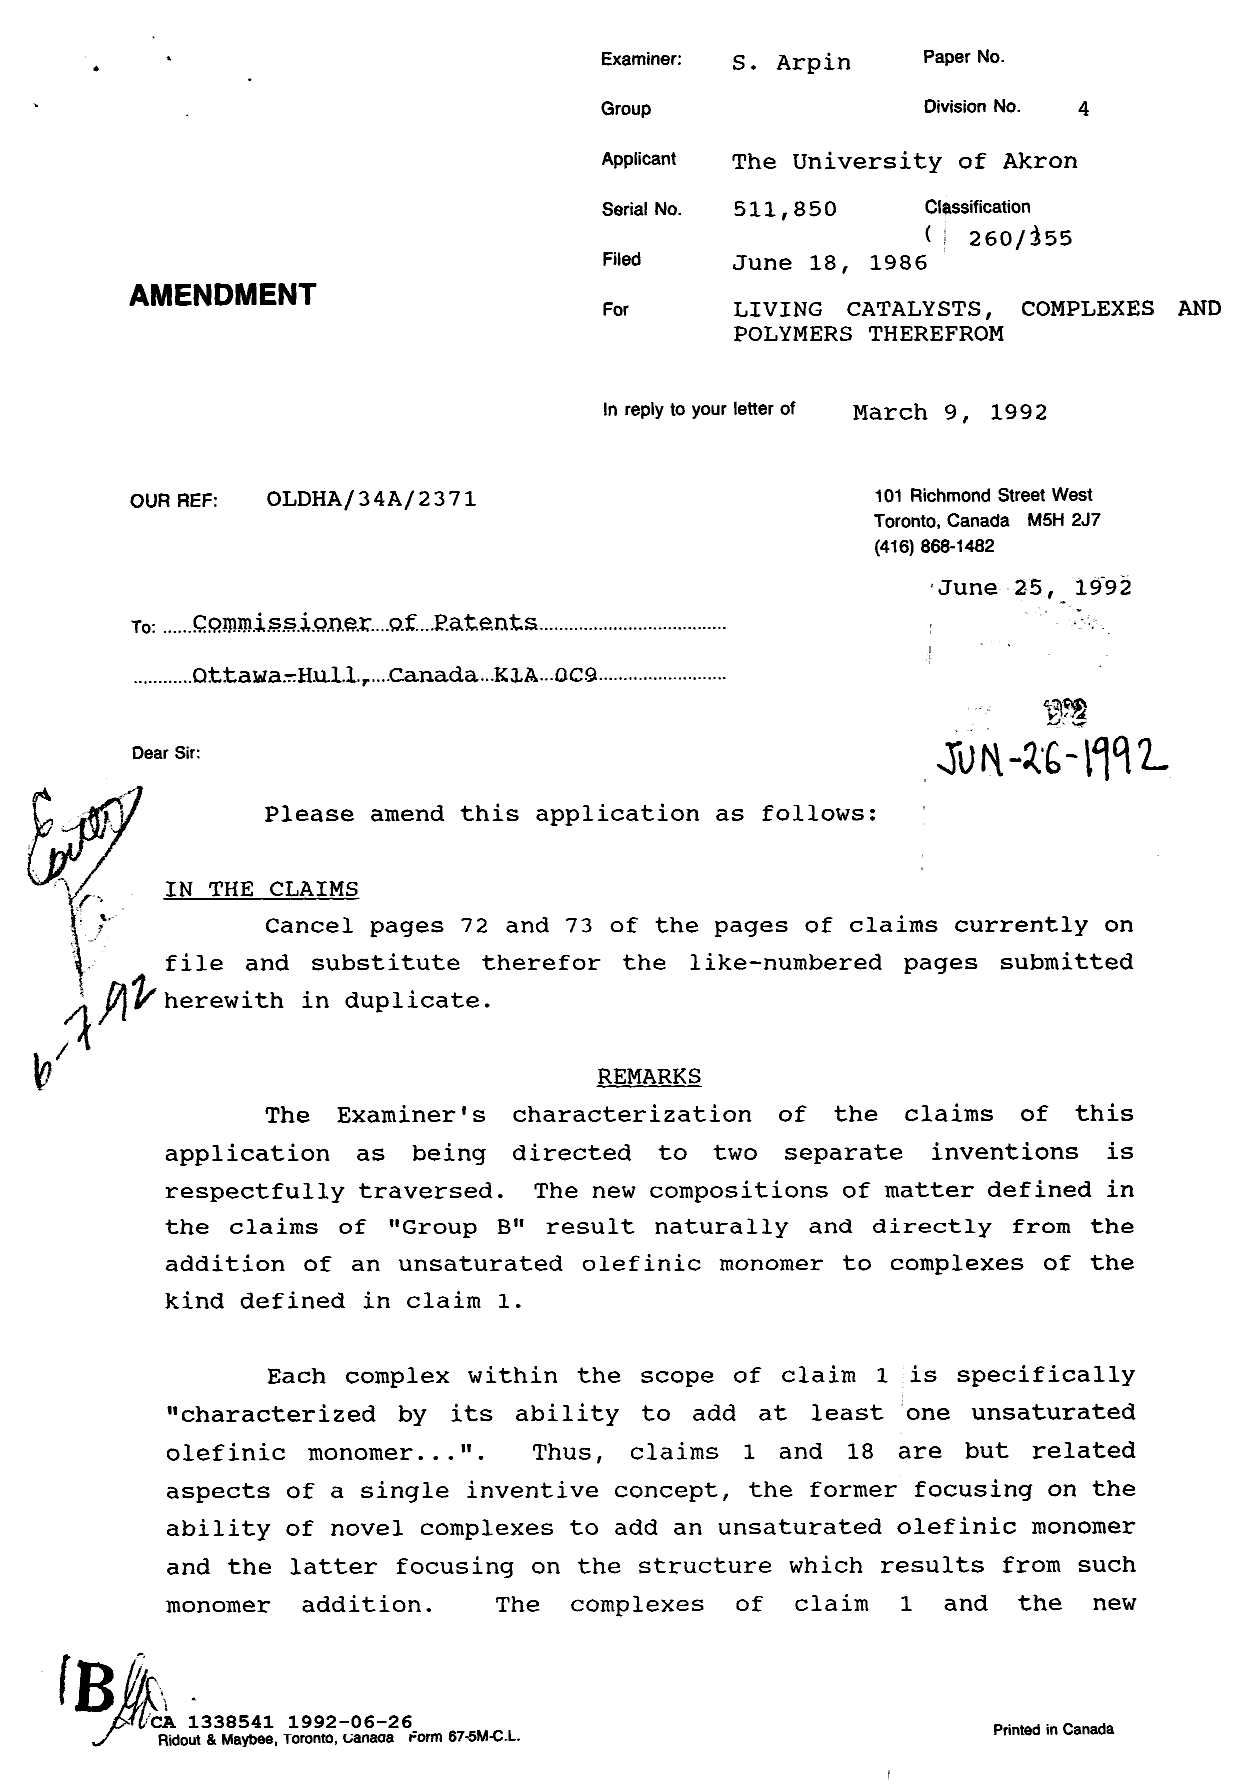 Canadian Patent Document 1338541. Prosecution Correspondence 19920626. Image 1 of 4